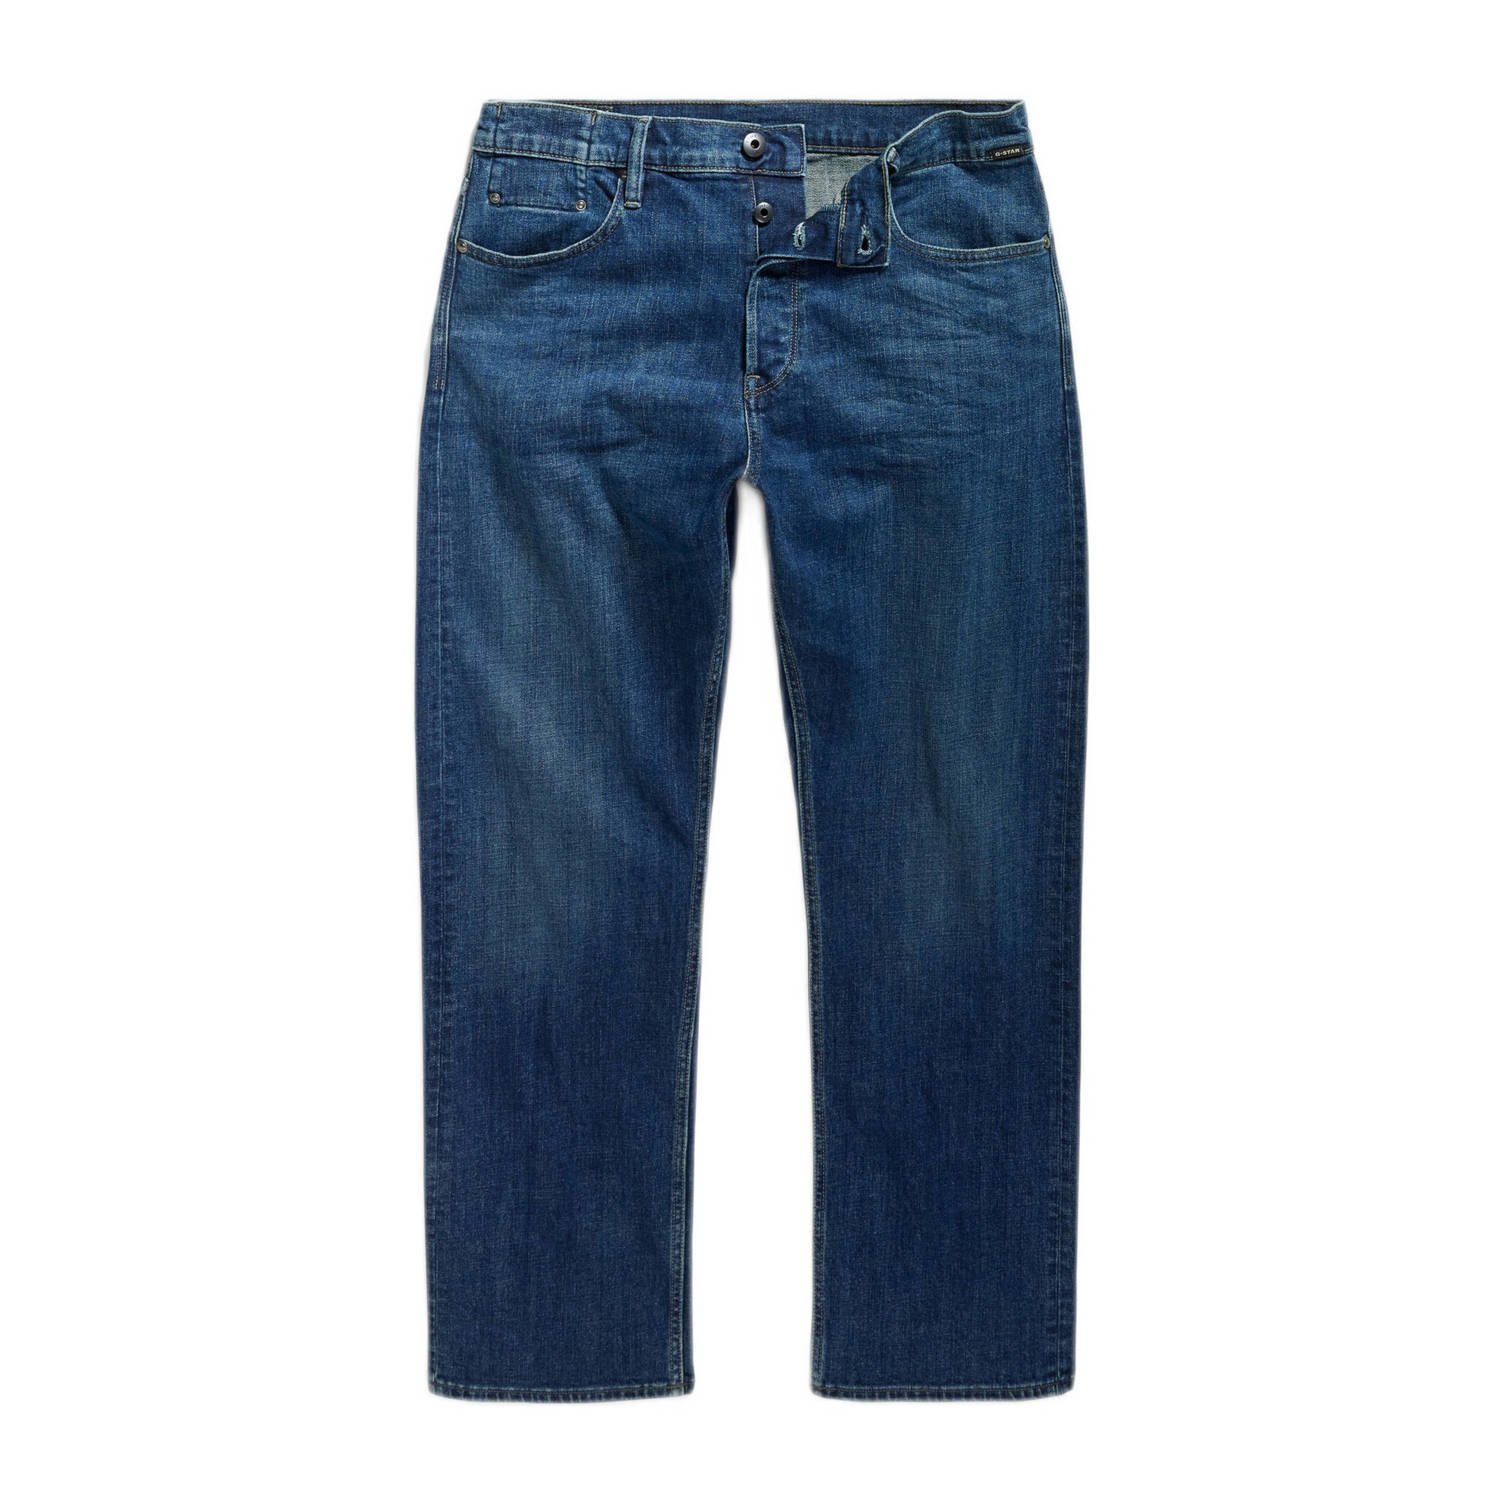 G-Star RAW Dakota straight fit jeans worn in sentry blue